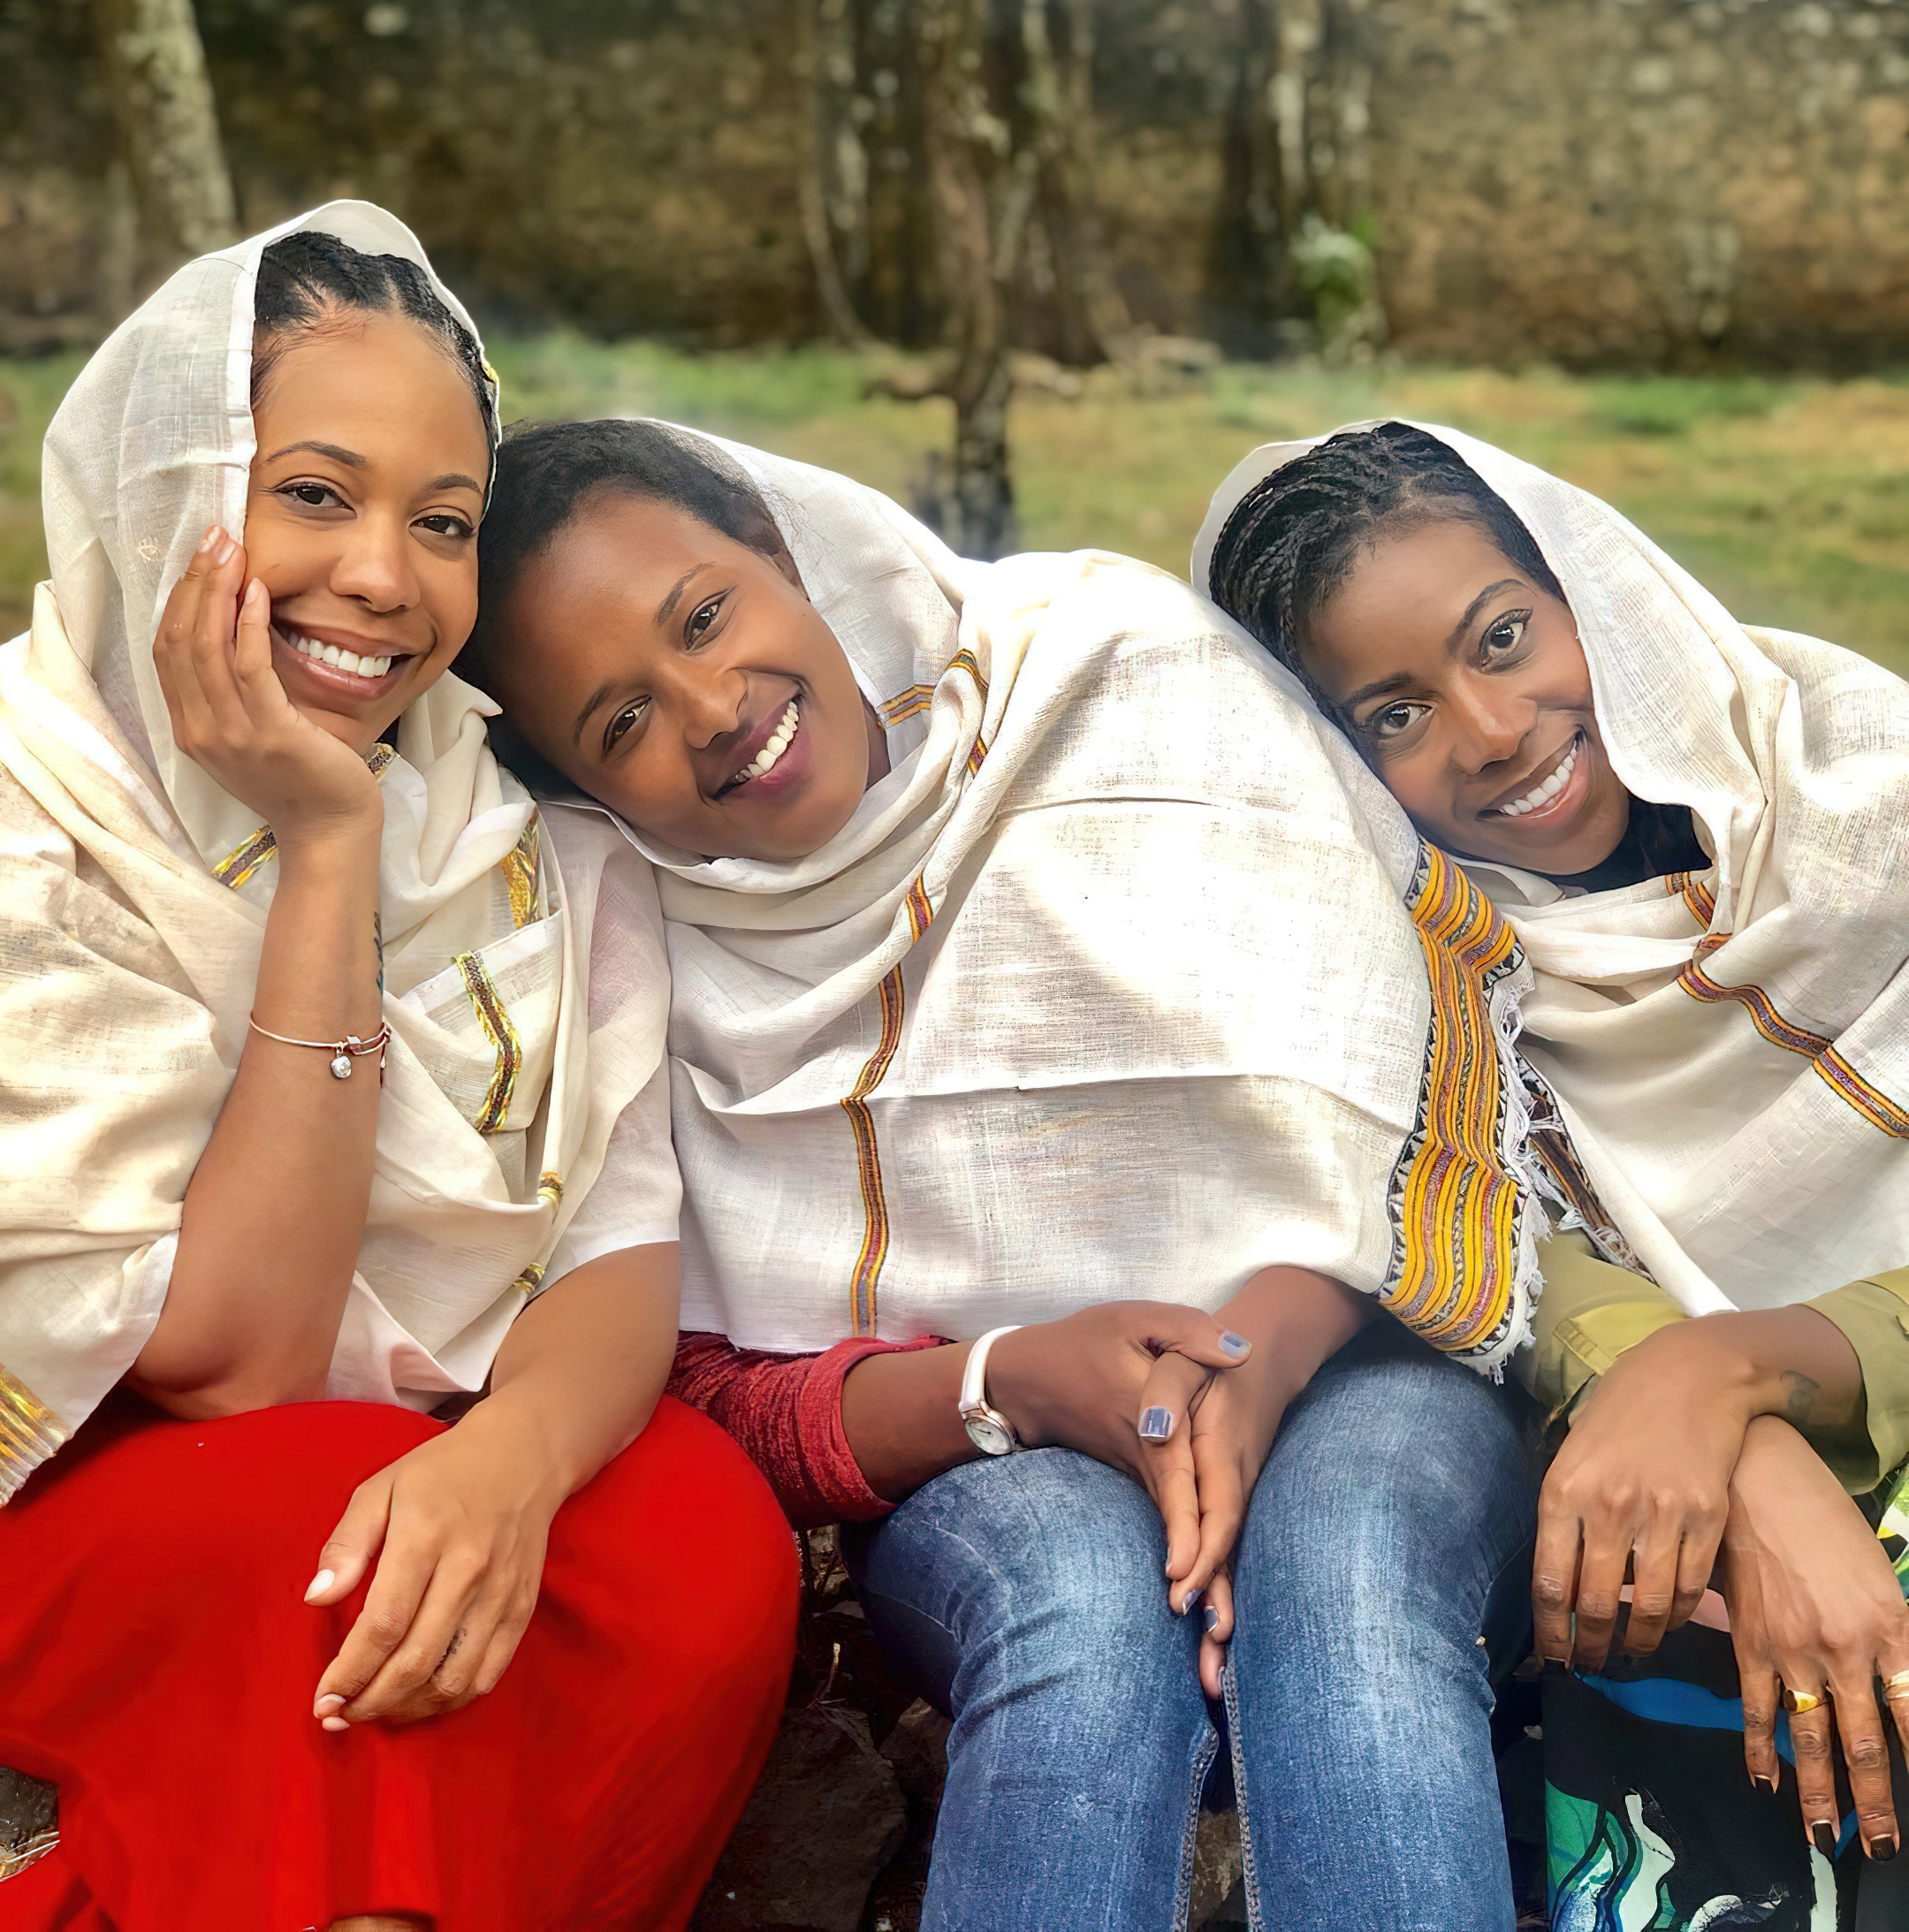 Ethiopia Tourism potential